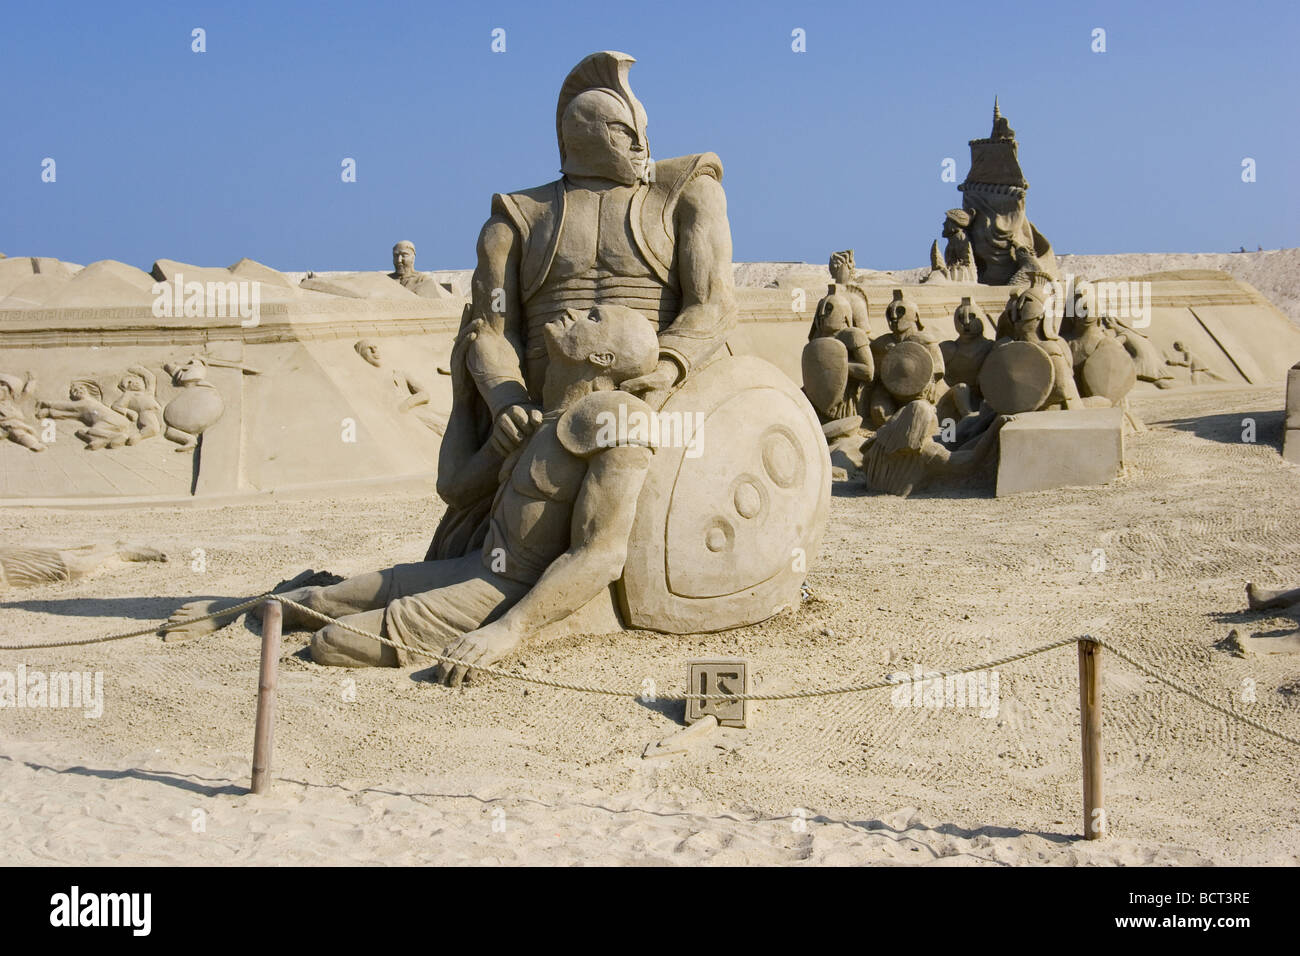 Sand sculpture display, depicting the Trojan War of ancient Greece ...